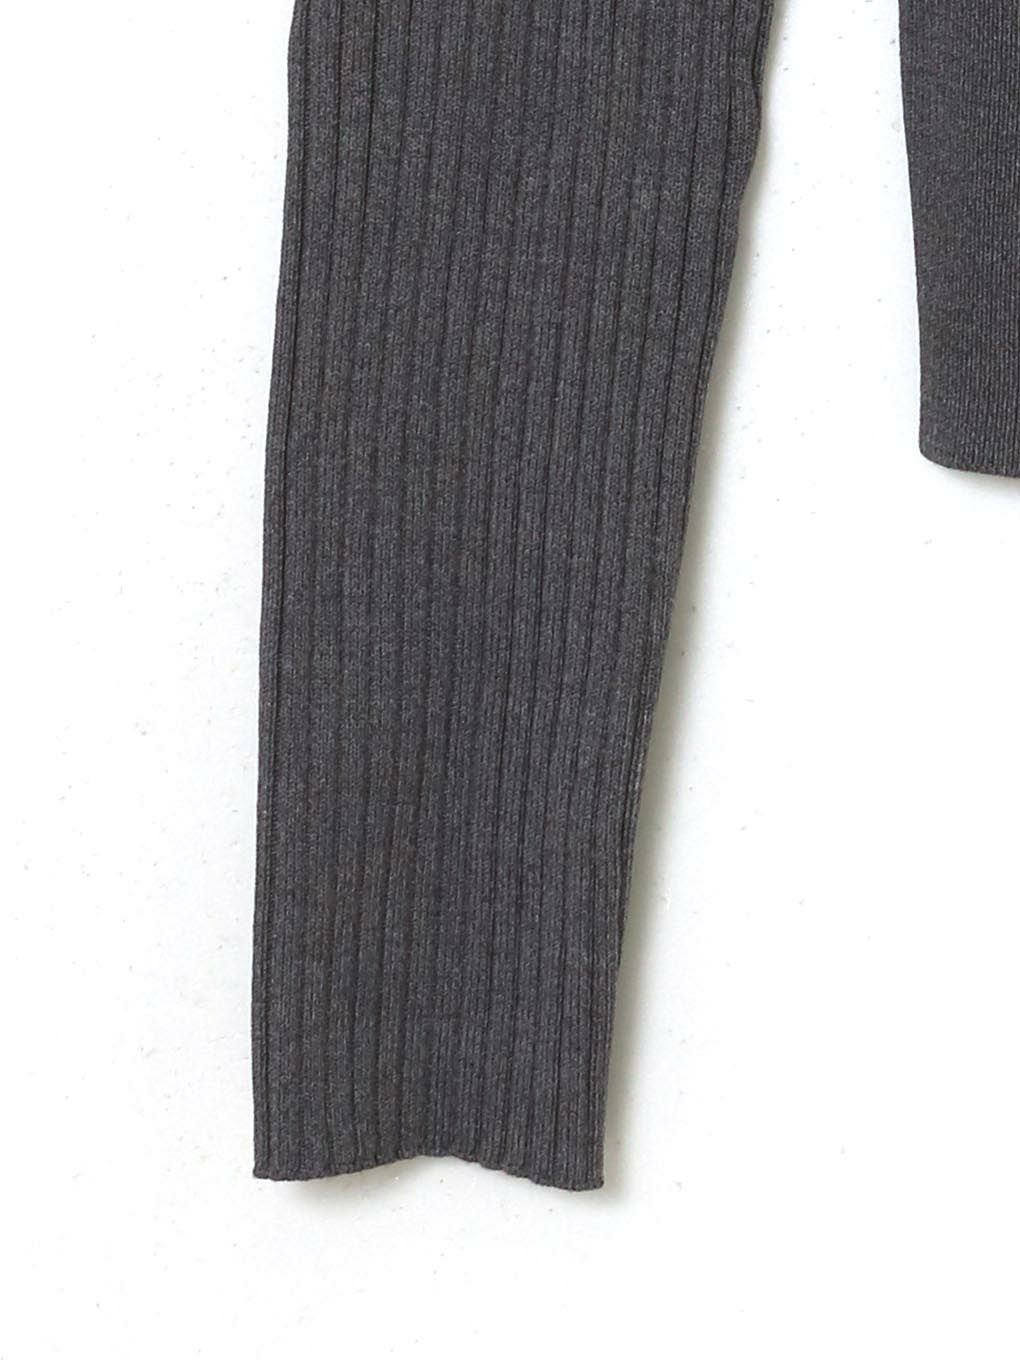 normcore bicolor knit tops